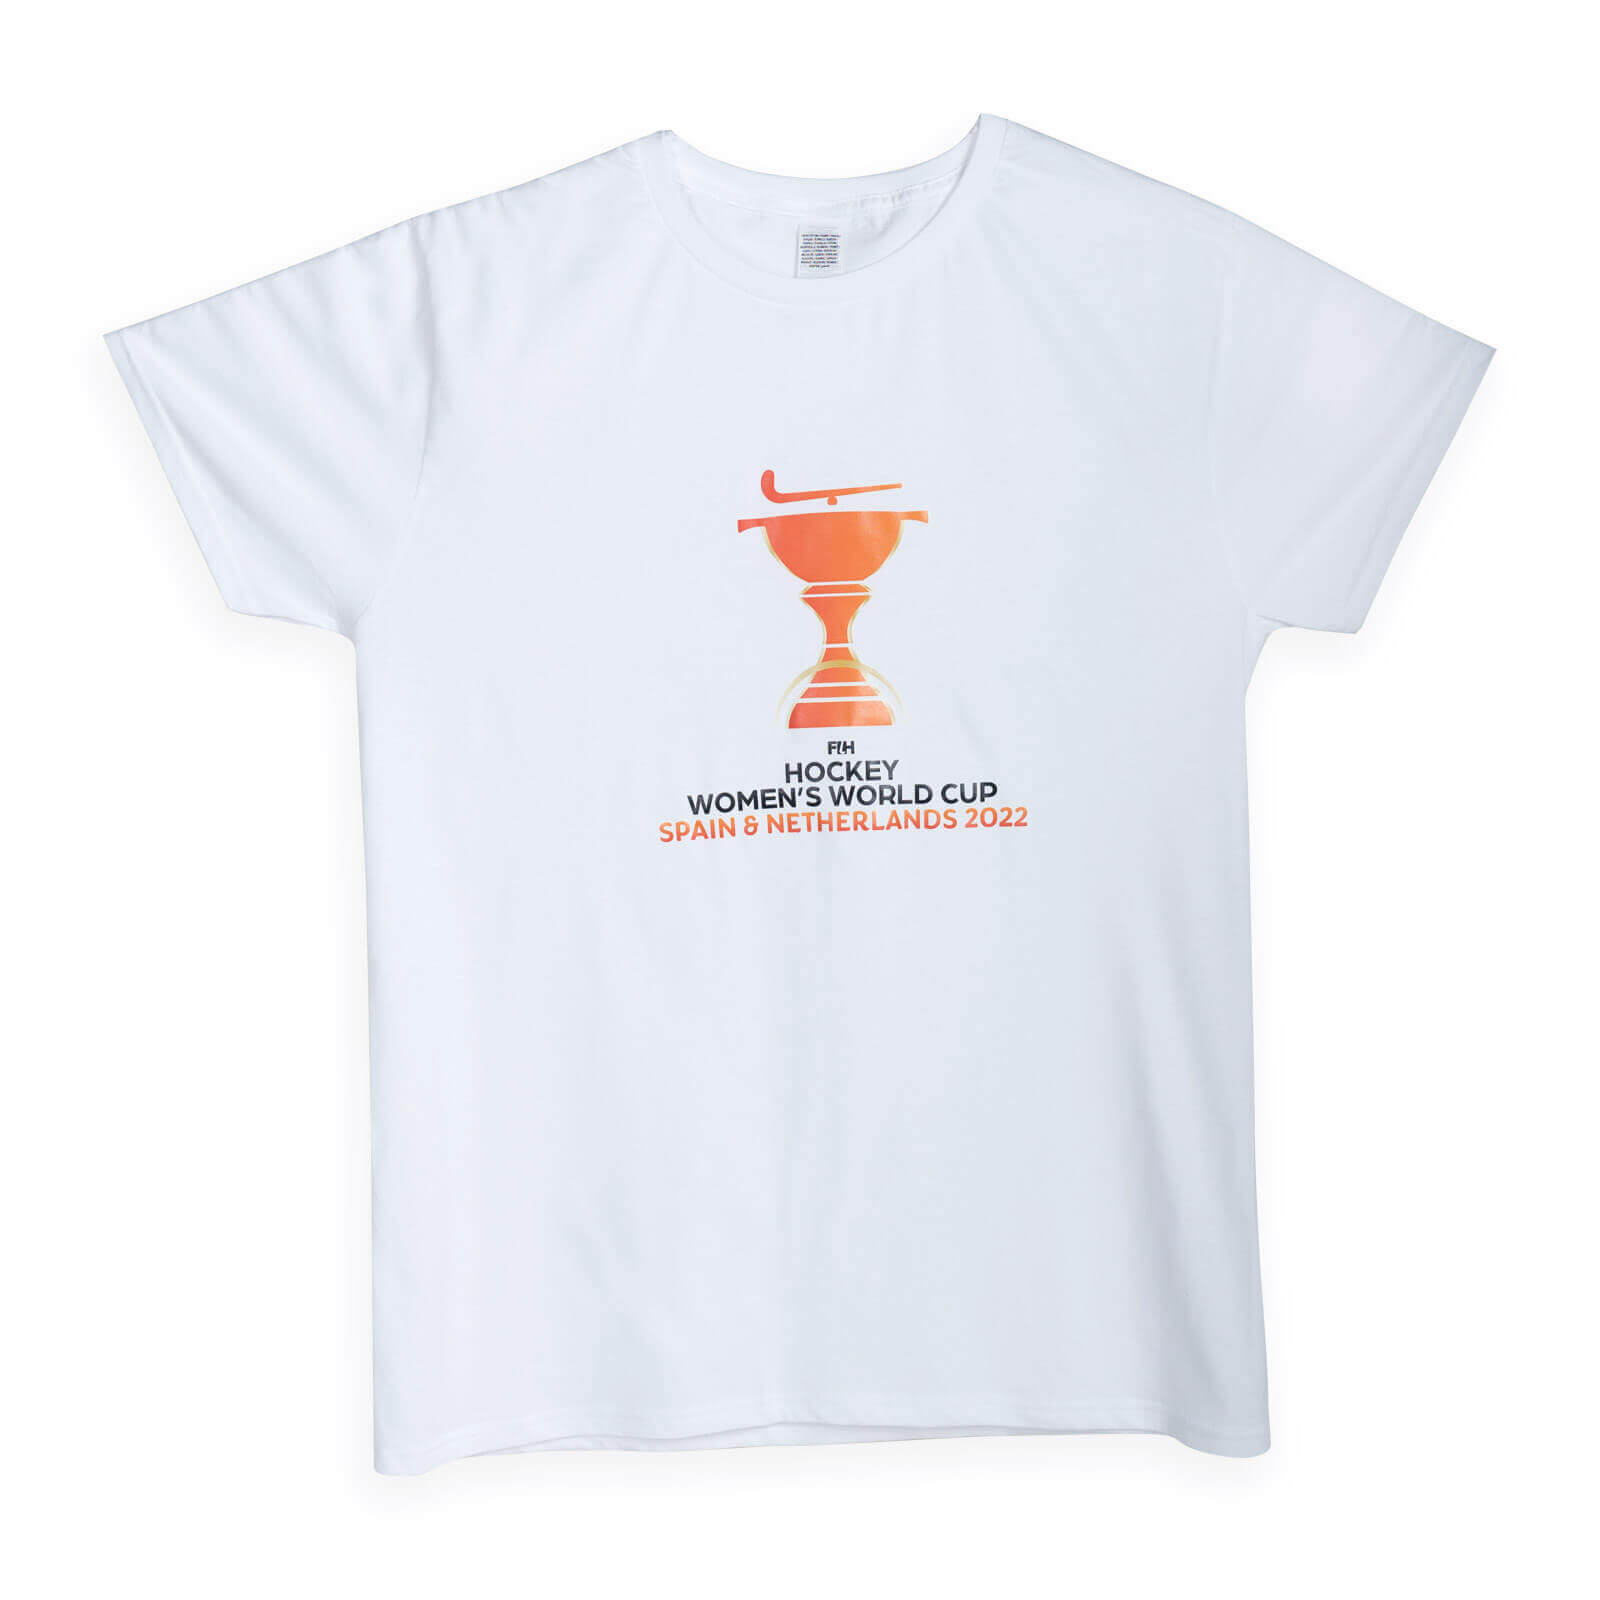 T-shirt, white - Women's World Cup Spain & Netherlands 2022 